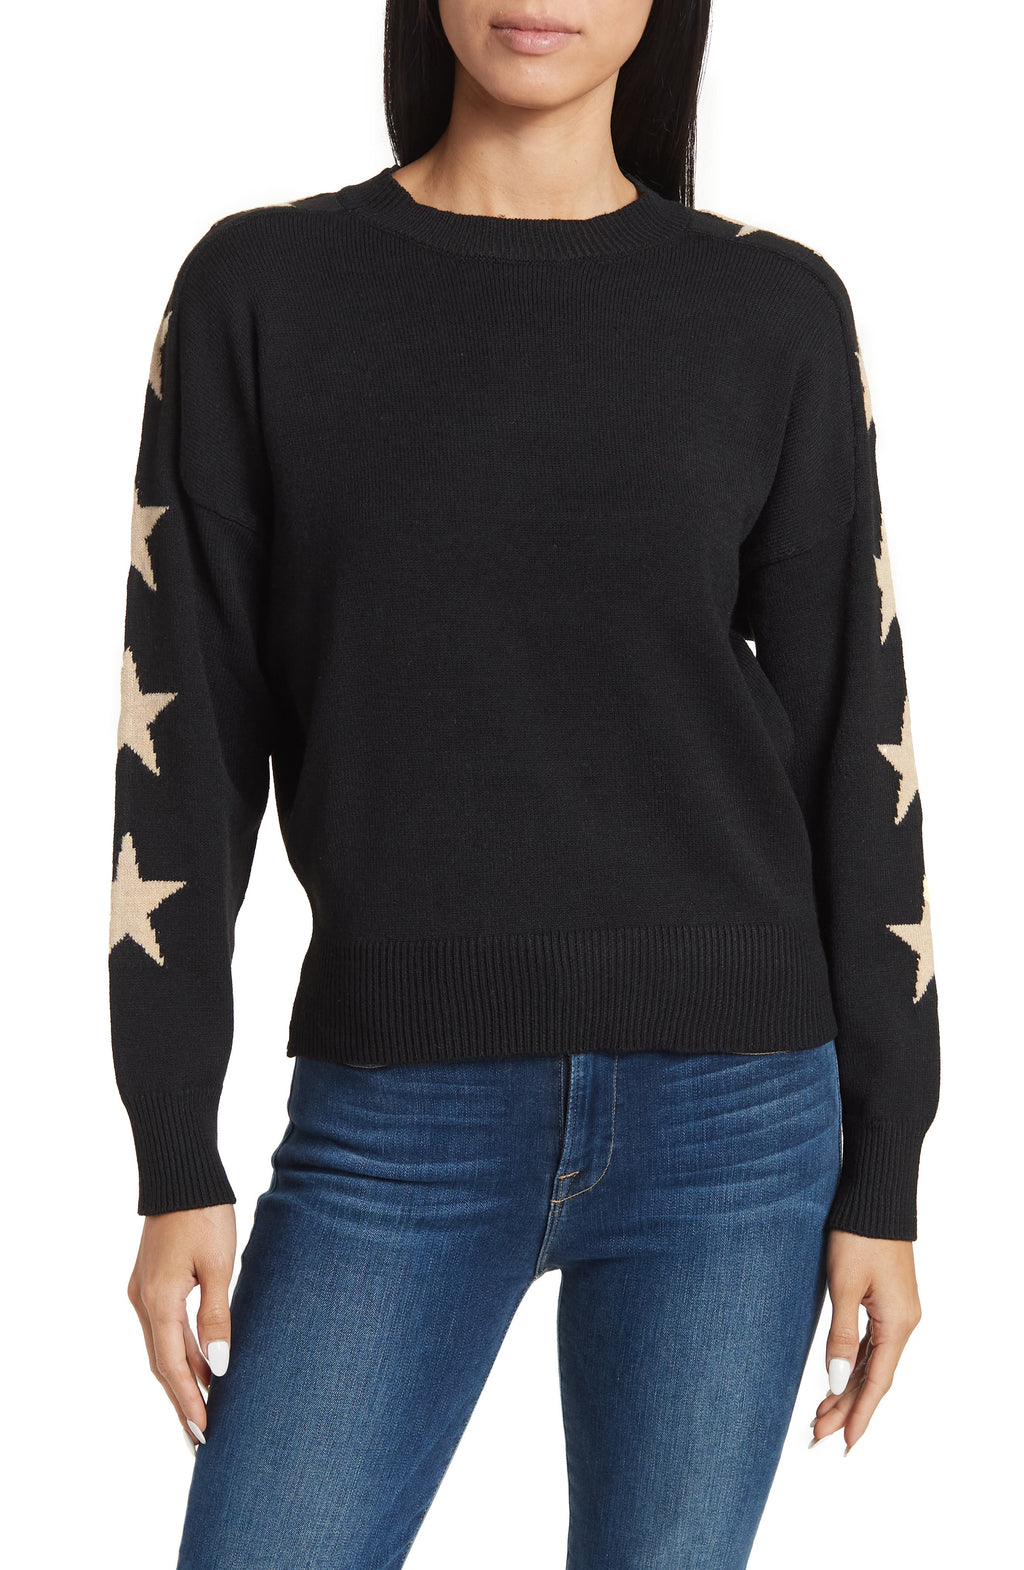 Sweet Romeo Star Print Sleeve Sweater, Main, color, BLACK/ CAMEL